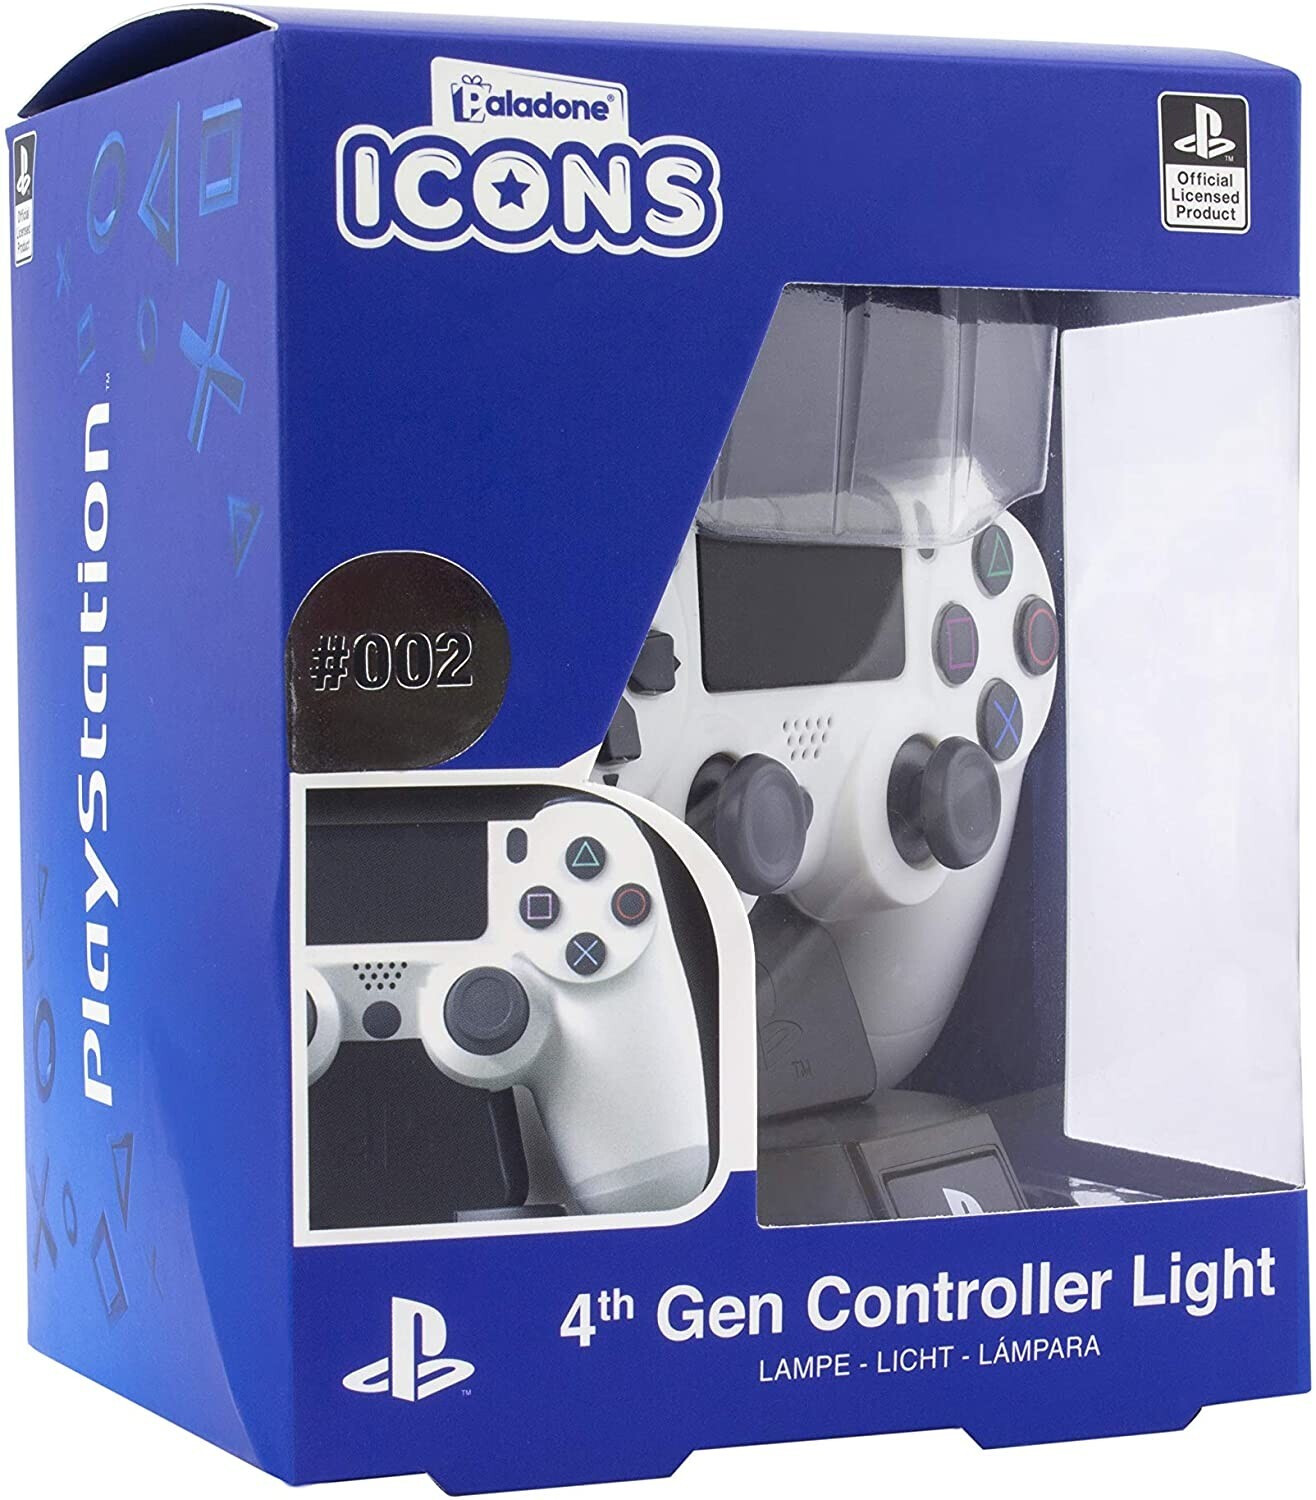 Sony Lampe Icones Playstation au meilleur prix